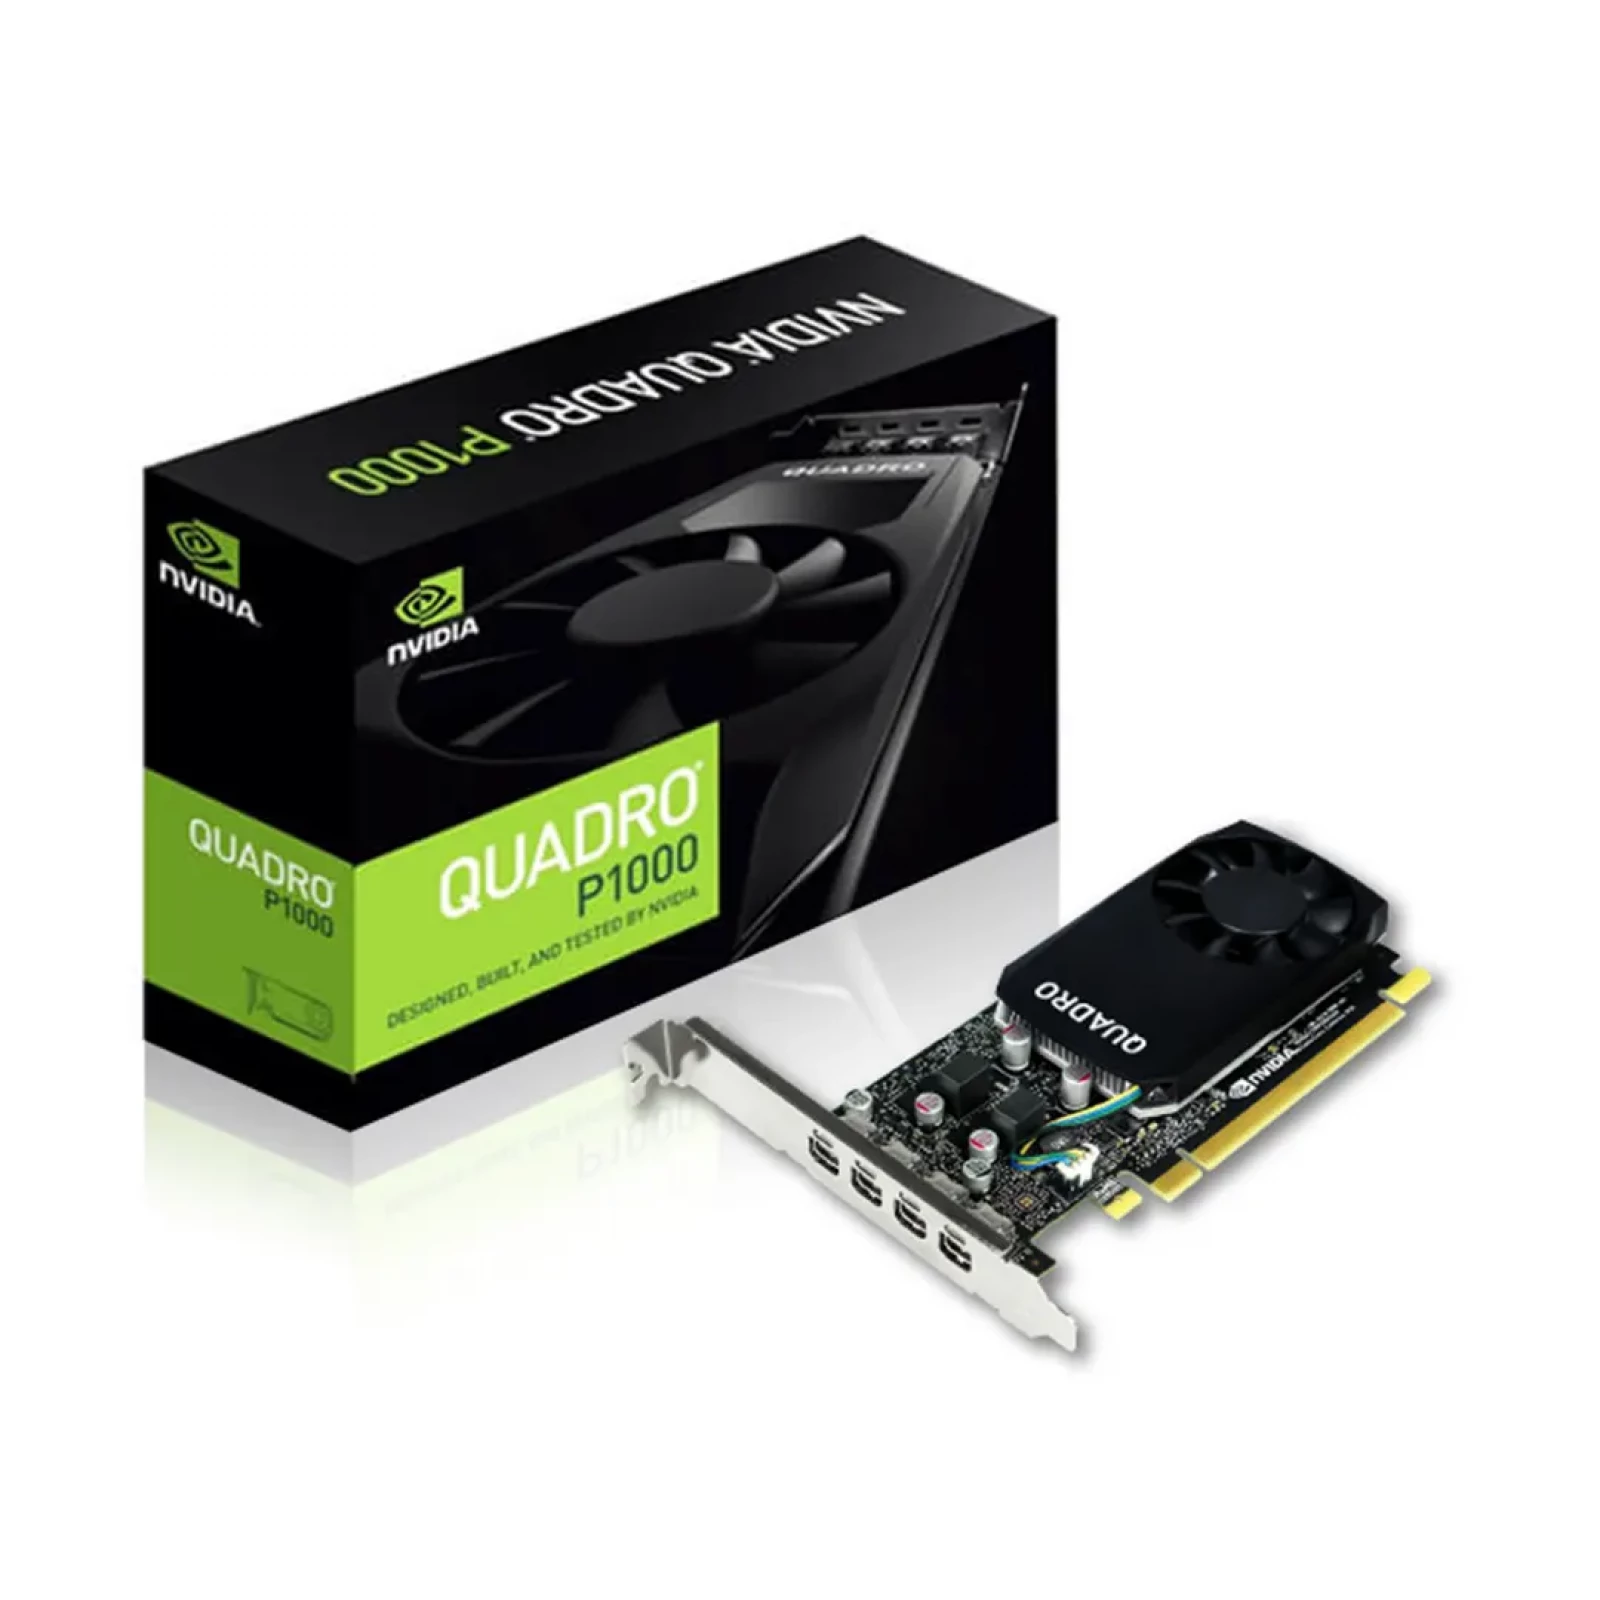 Nvidia Quadro P1000 4 GB GDDR5 Graphics Card price in ...